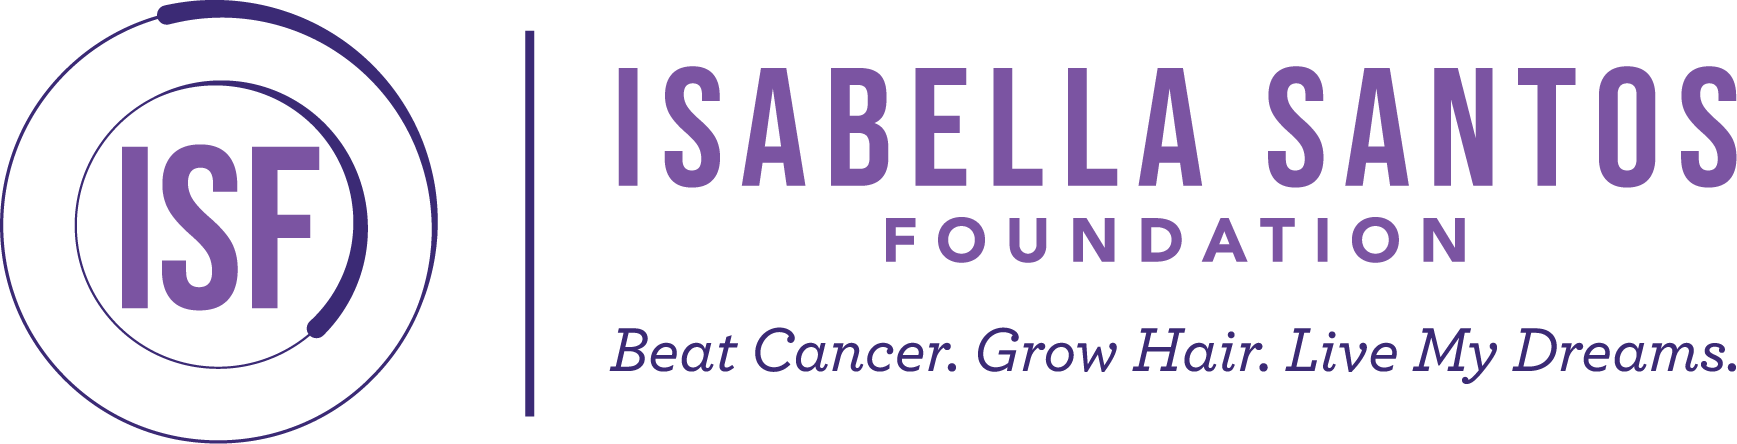 Isabella Santos Foundation-full-horizontal